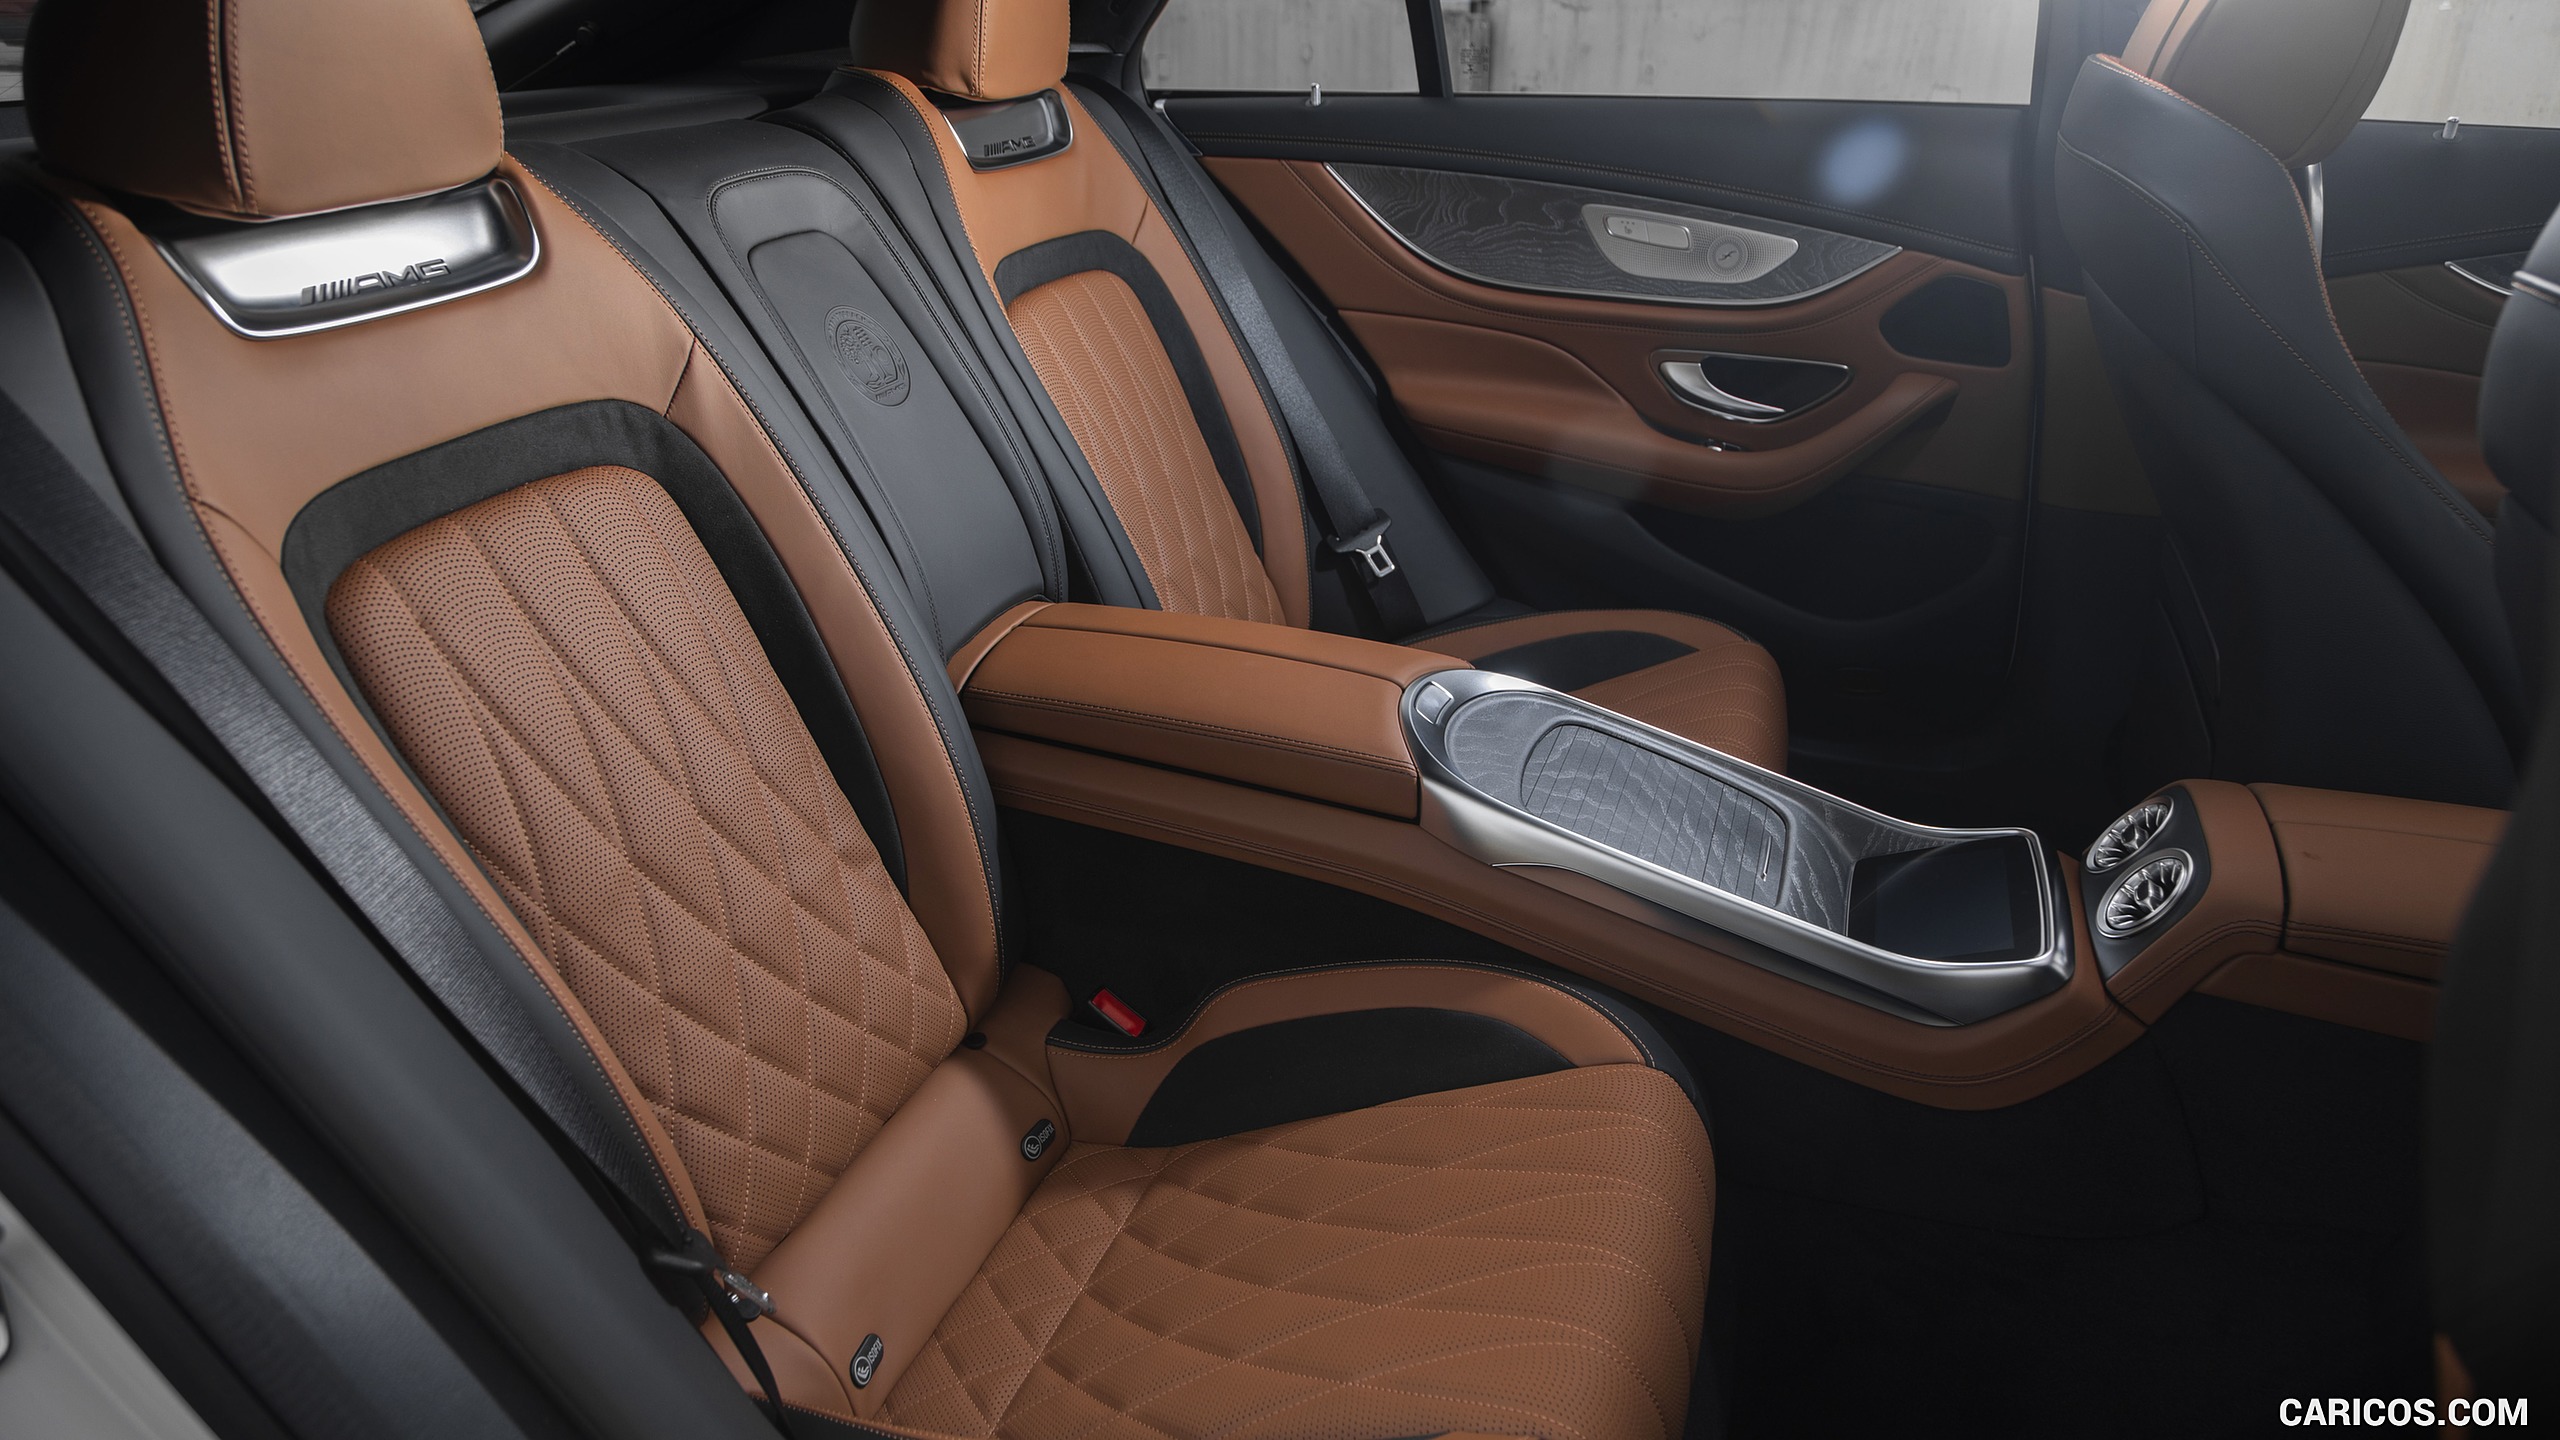 2019 Mercedes-AMG GT 53 4-Door Coupe (US-Spec) - Interior, Rear Seats, #365 of 427